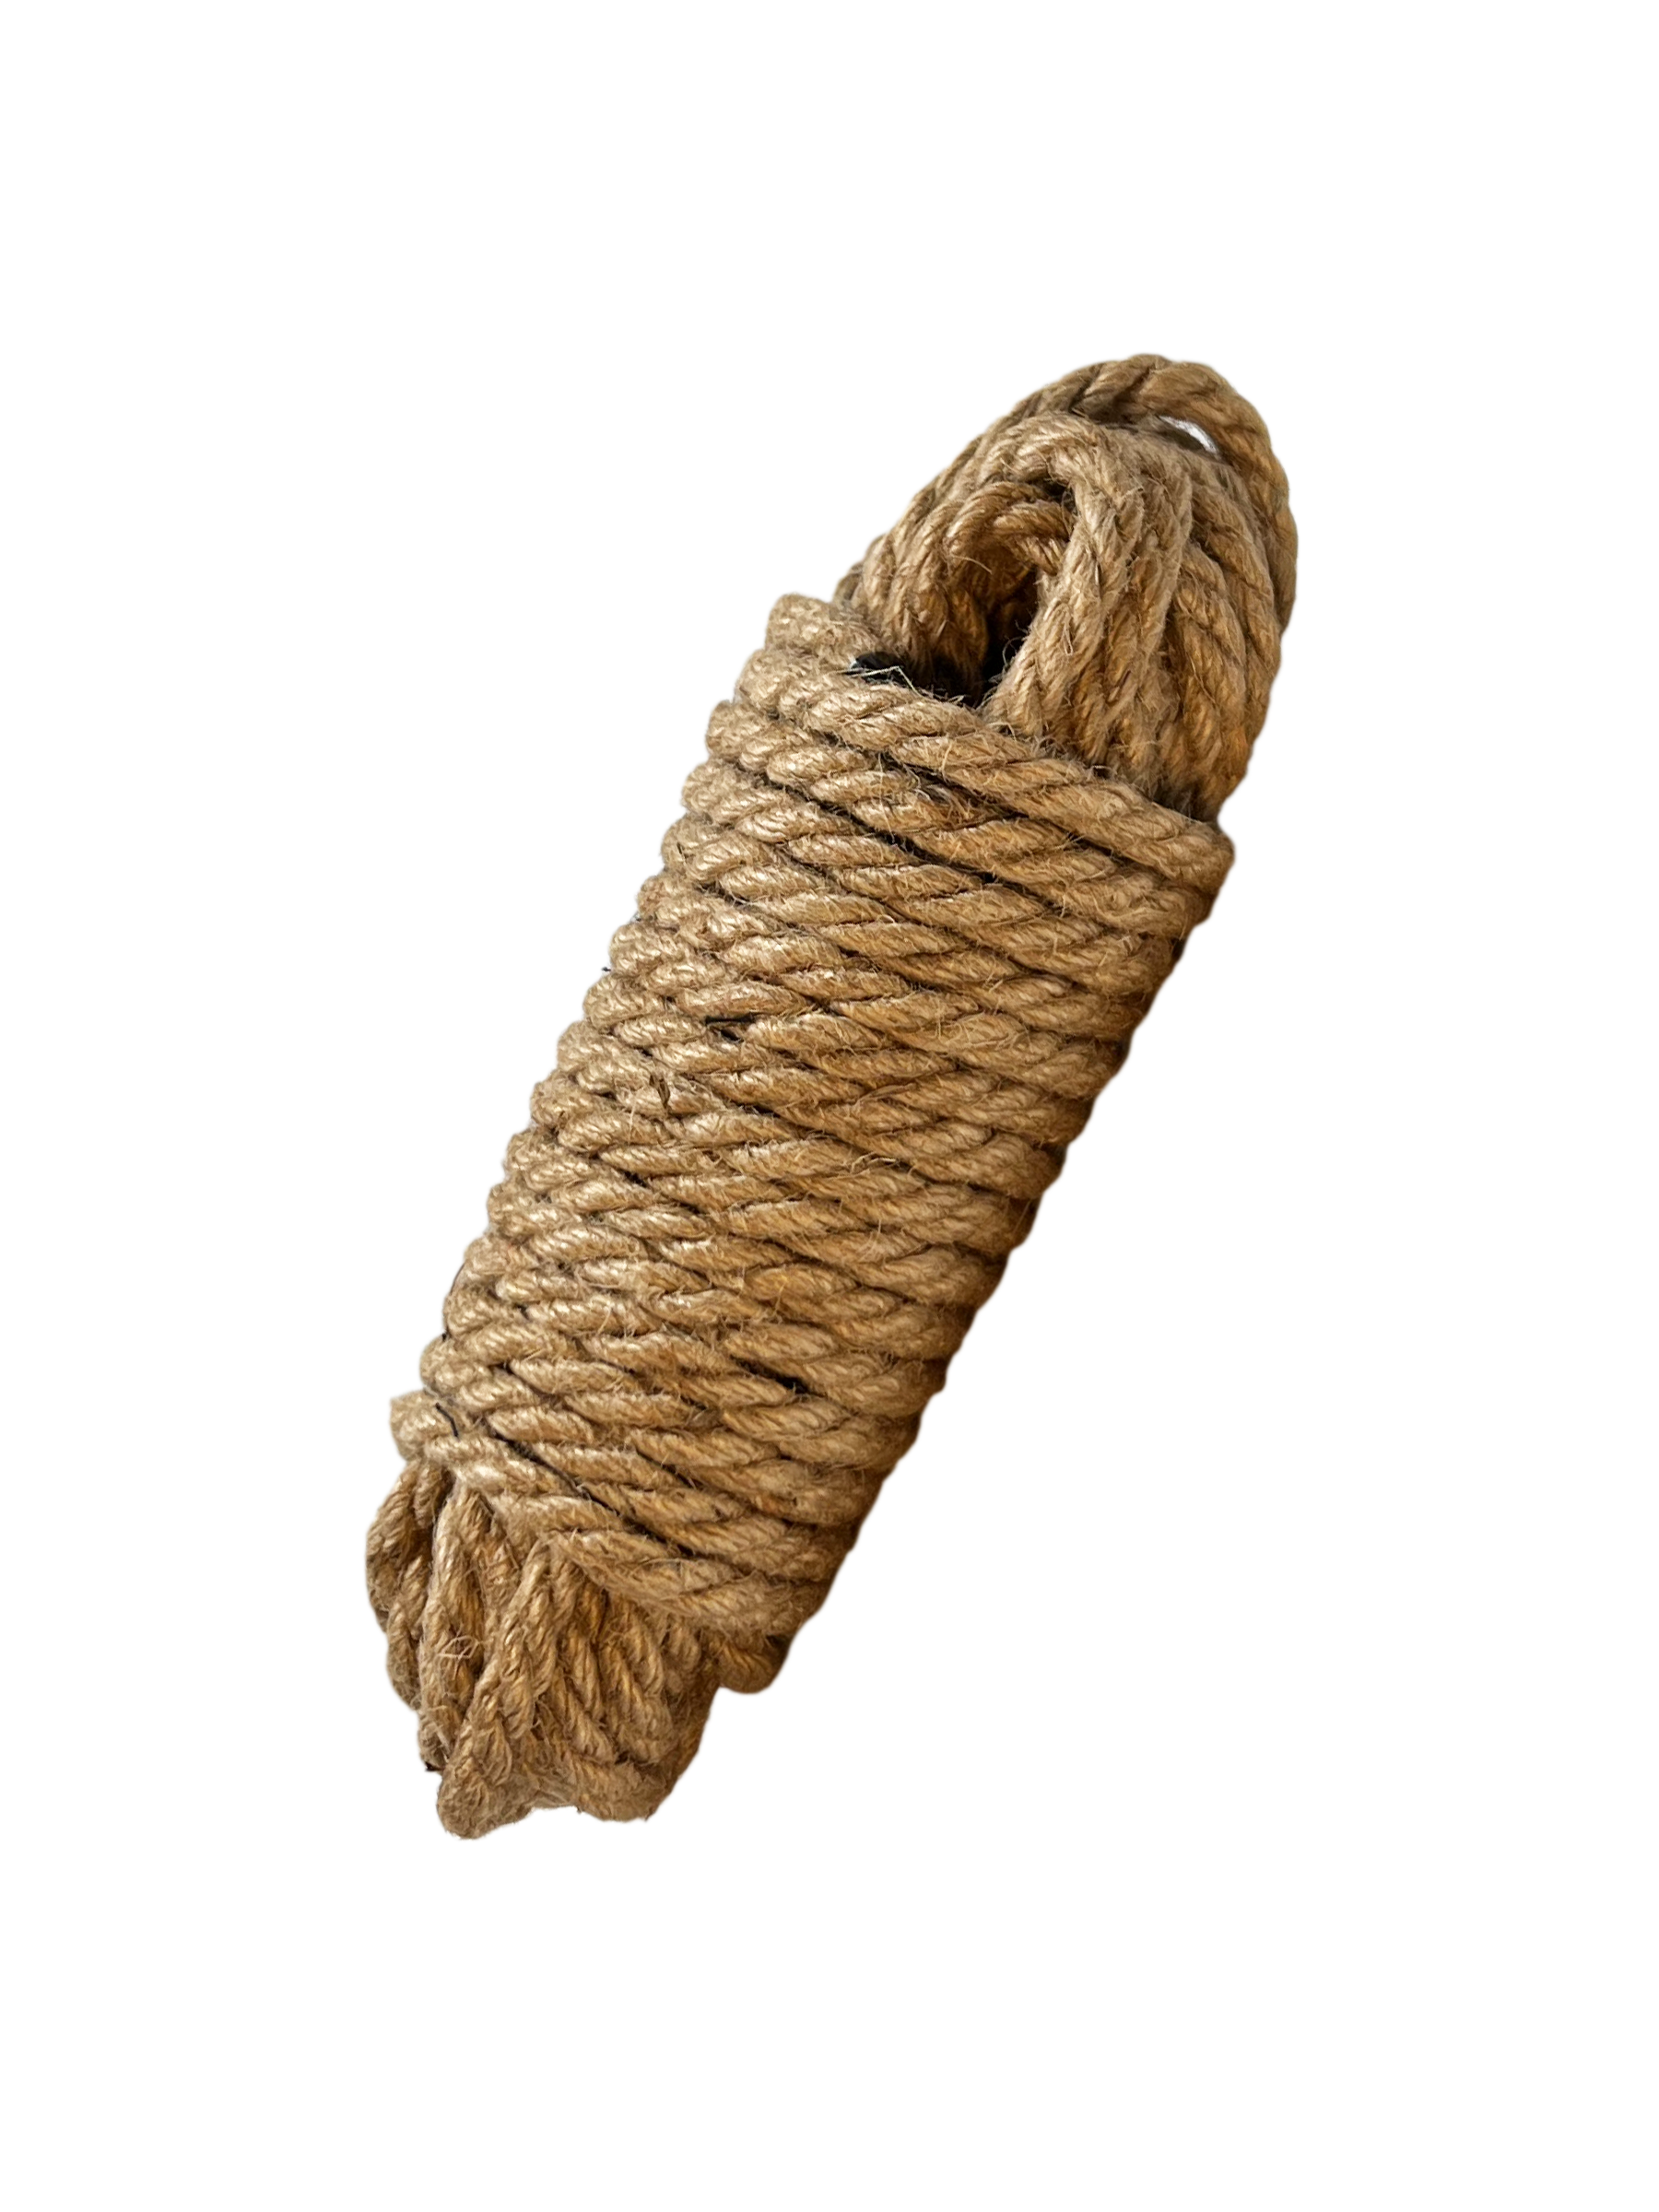 Handmade Hemp Bondage Rope - Come As You Are